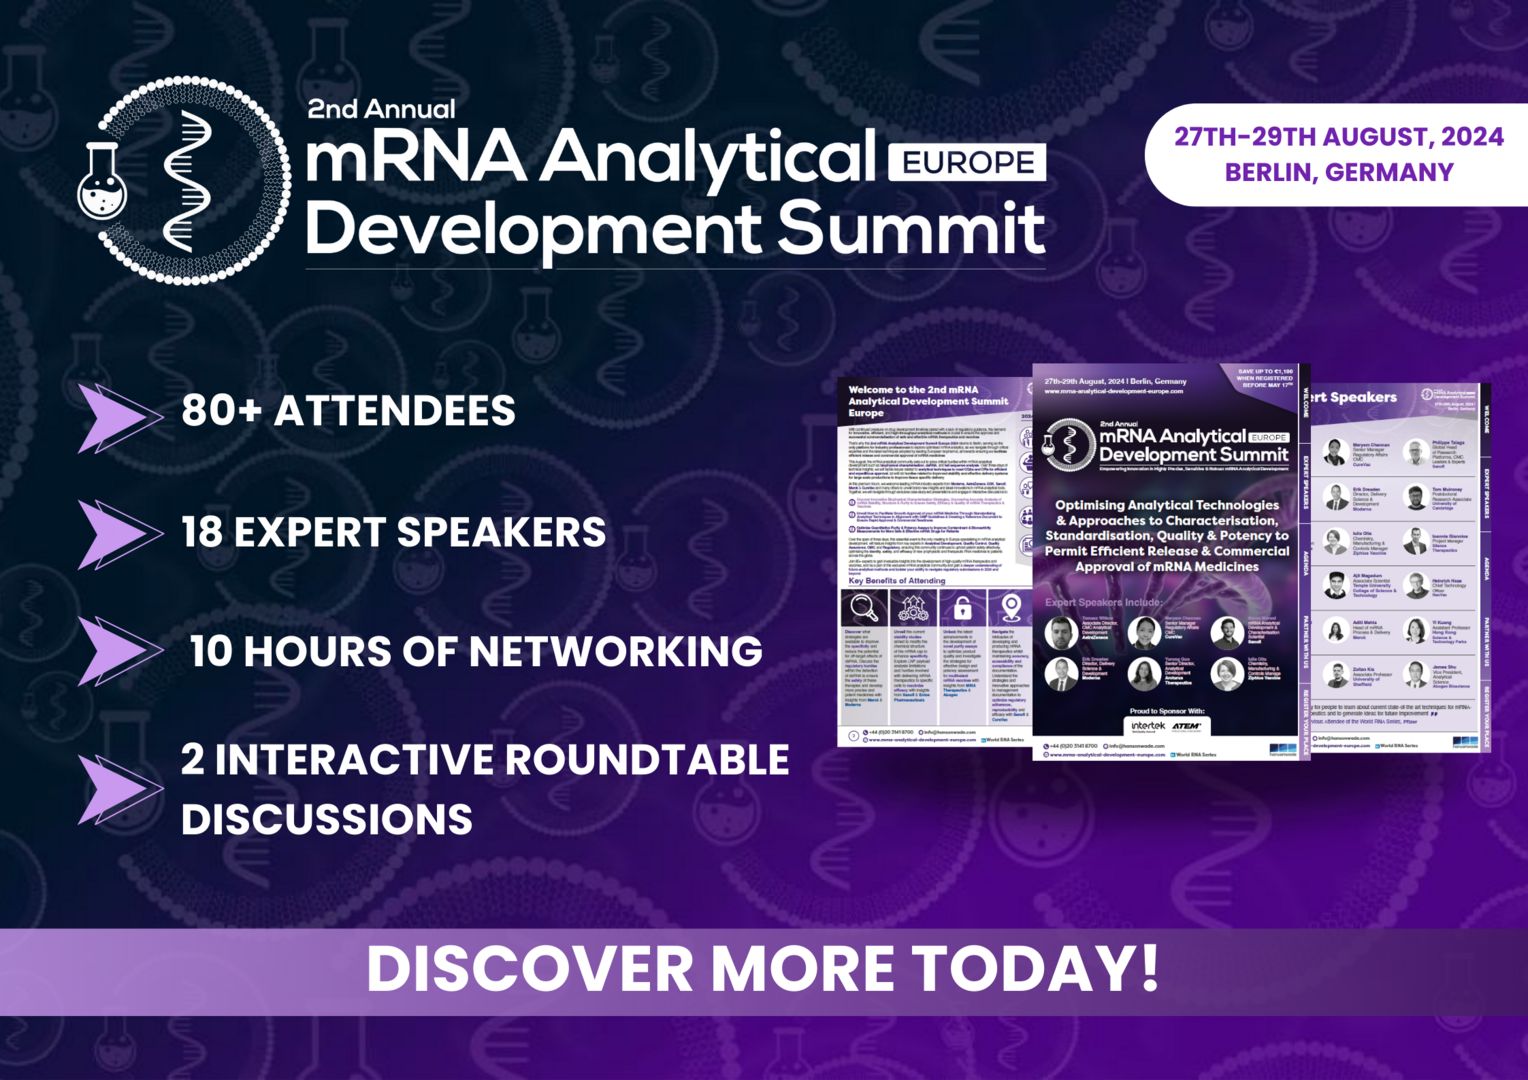 2nd mRNA Analytical Development Summit Europe, Berlin, Germany